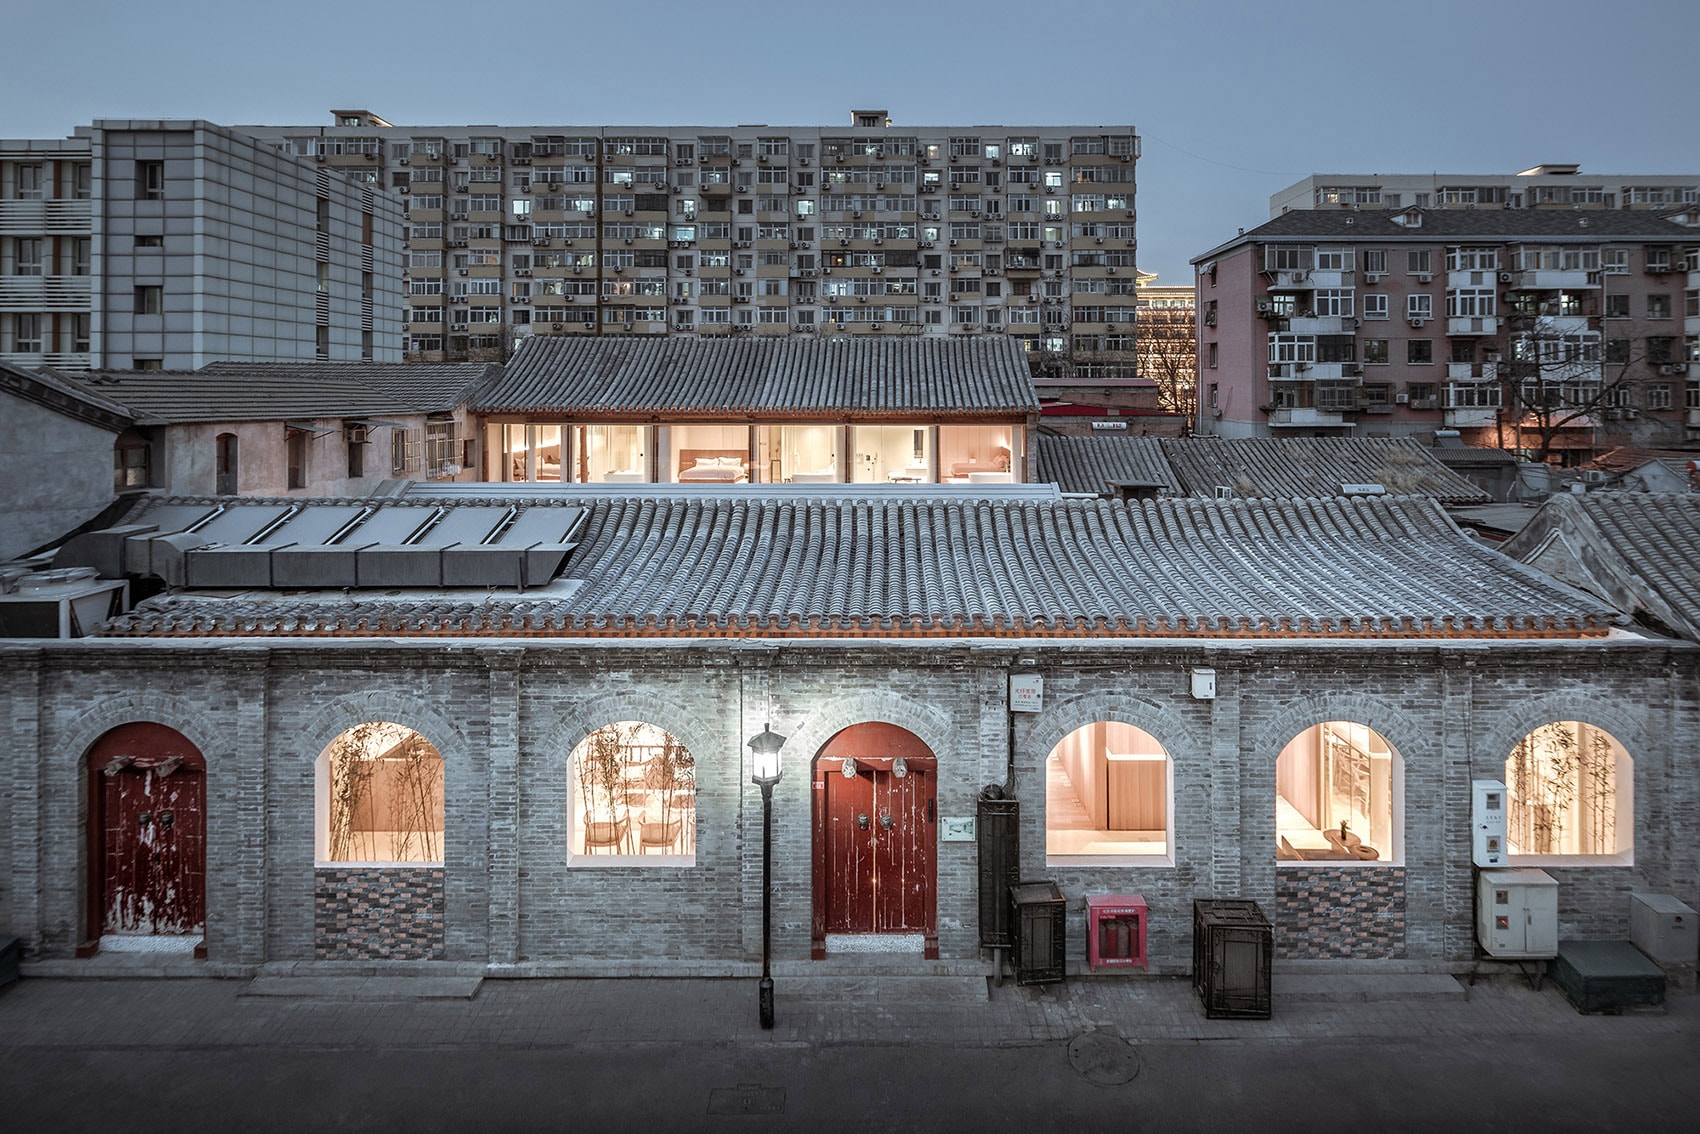 Arch Studio 於北京打造全新觀光酒店「疊院儿」